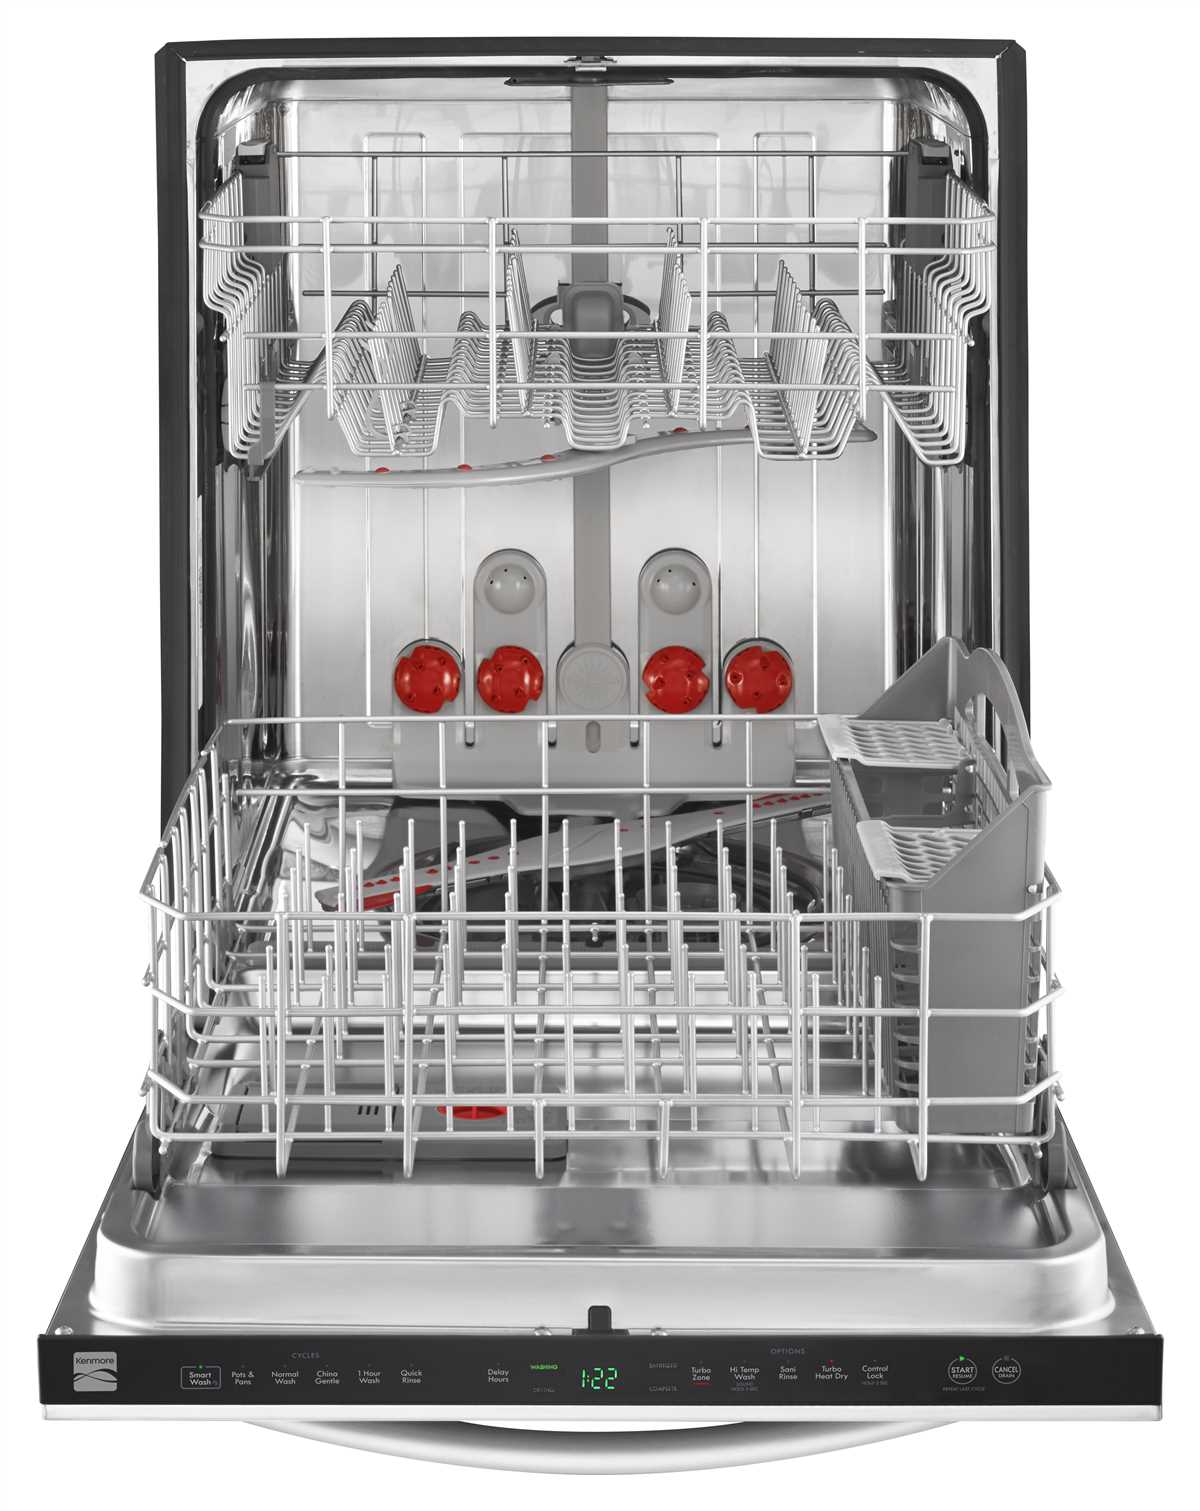 Understanding the Kenmore dishwasher model 665